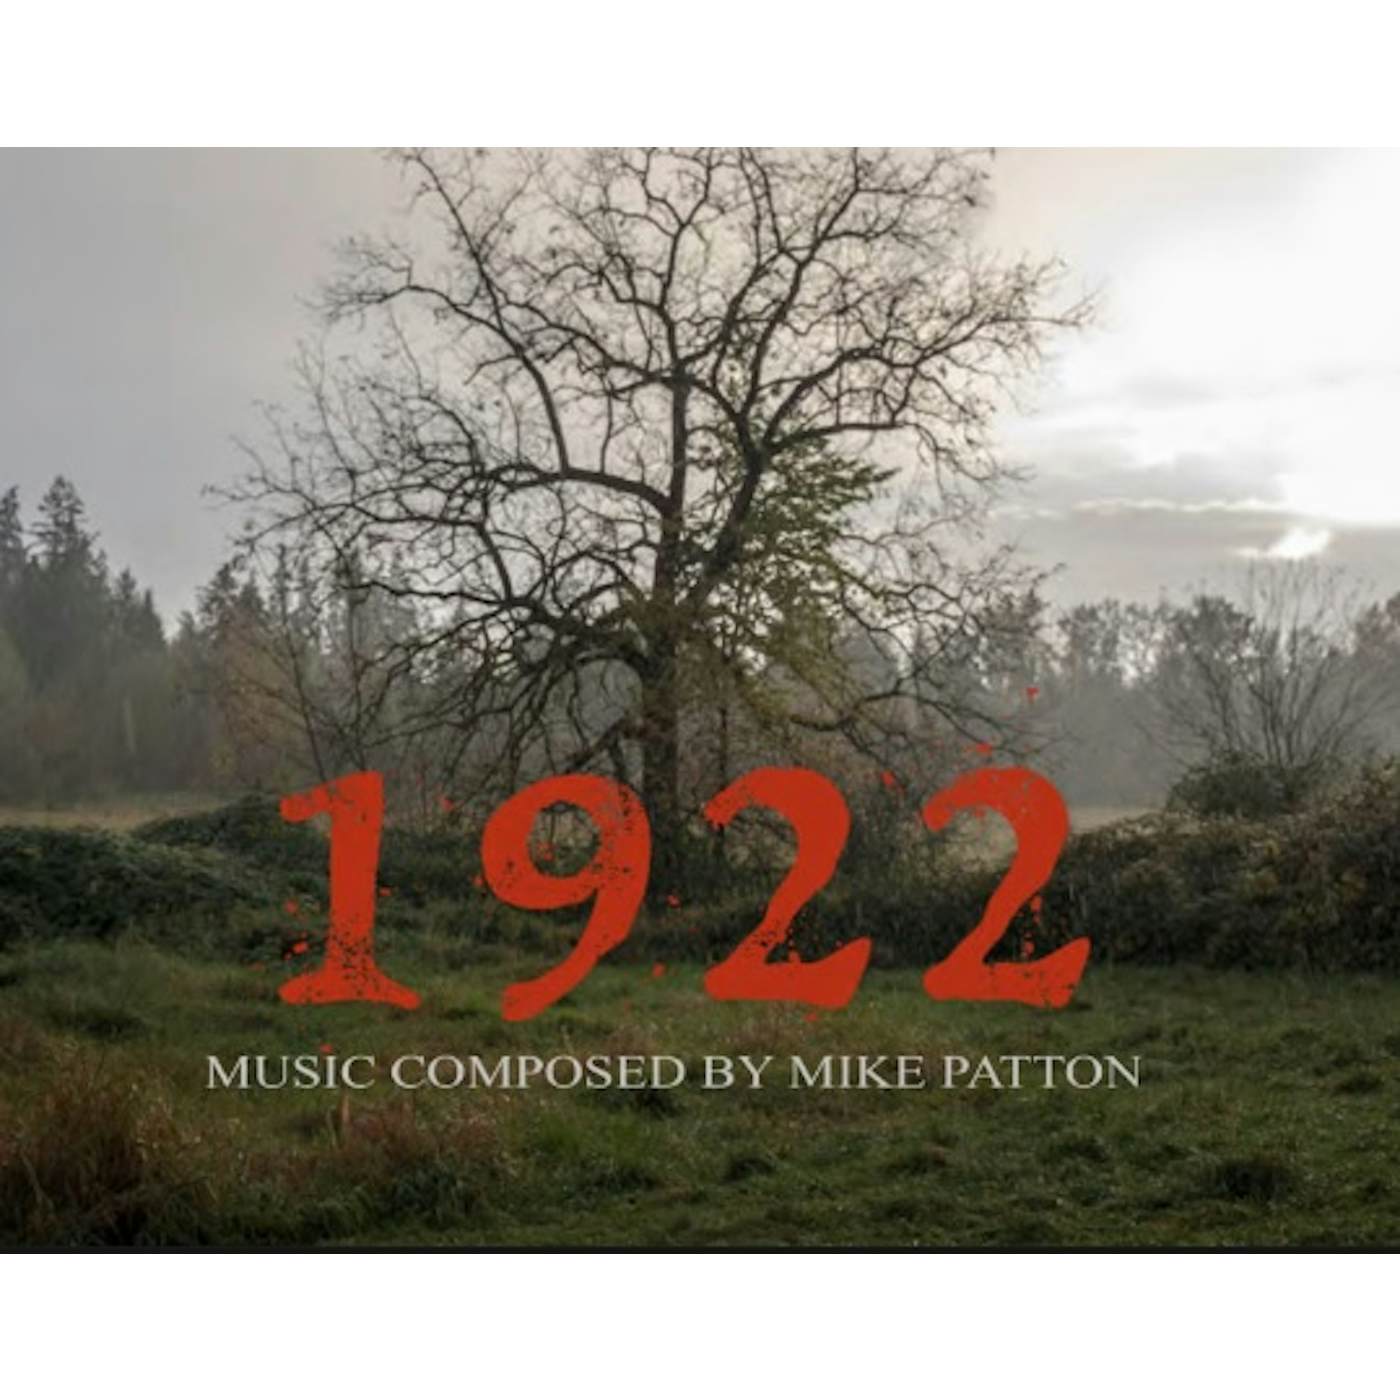 Mike Patton 1922 Original Score Vinyl Record